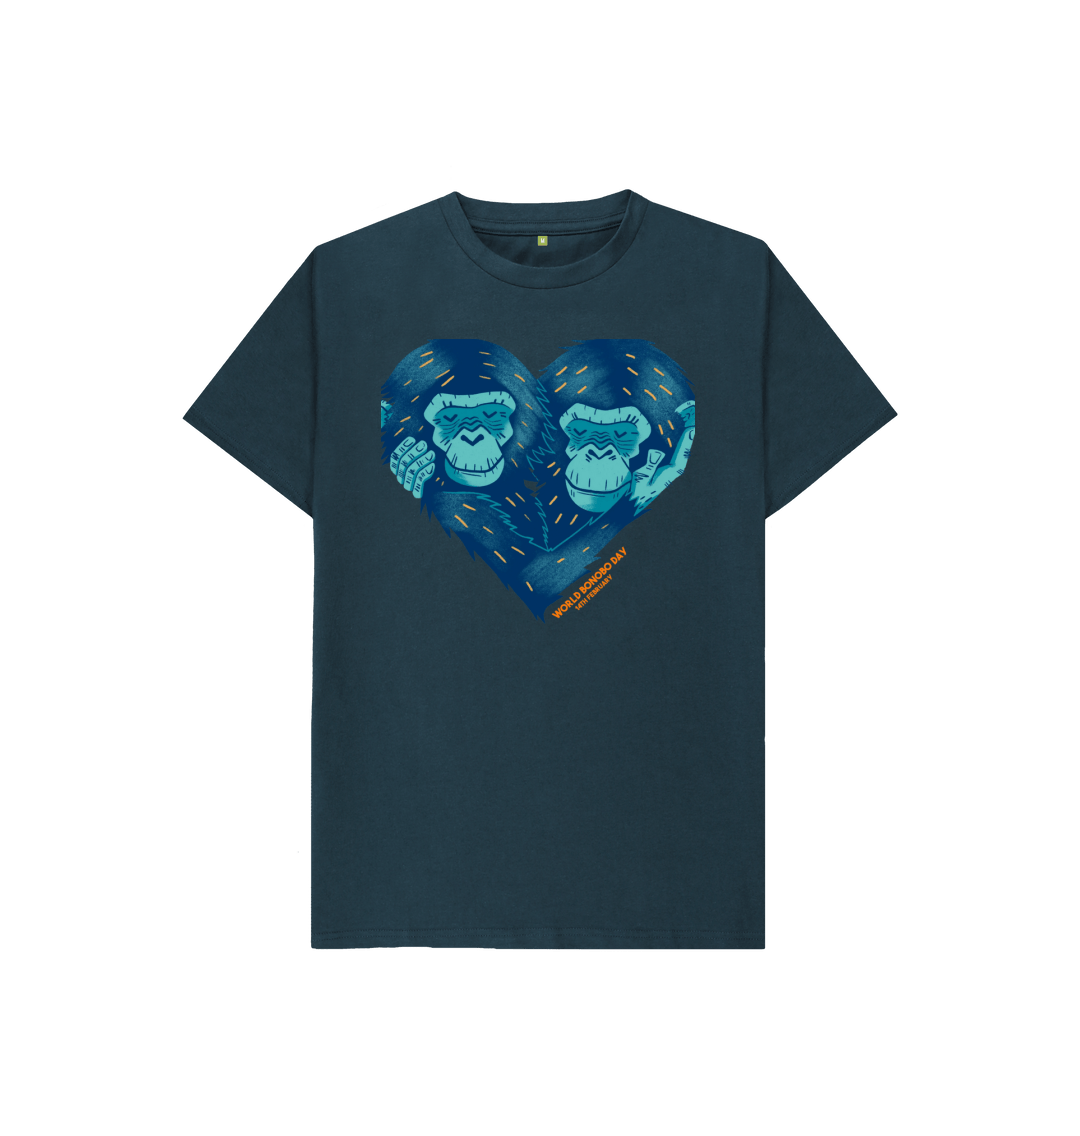 Kids World Bonobo Day T-shirt